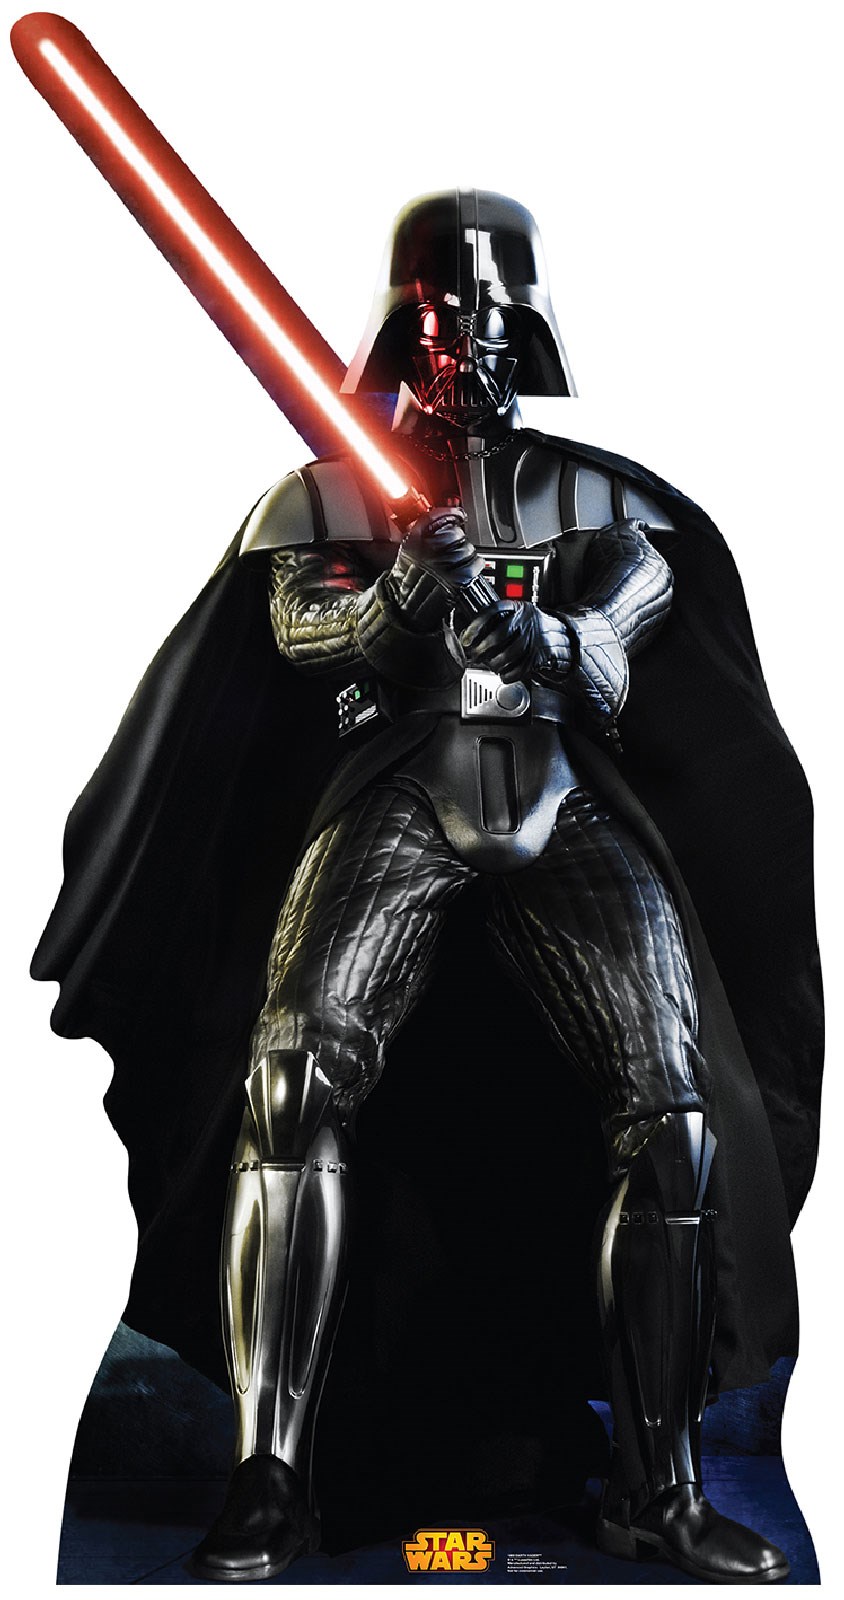 Star Wars Darth Vader Cardboard Stand Up 7